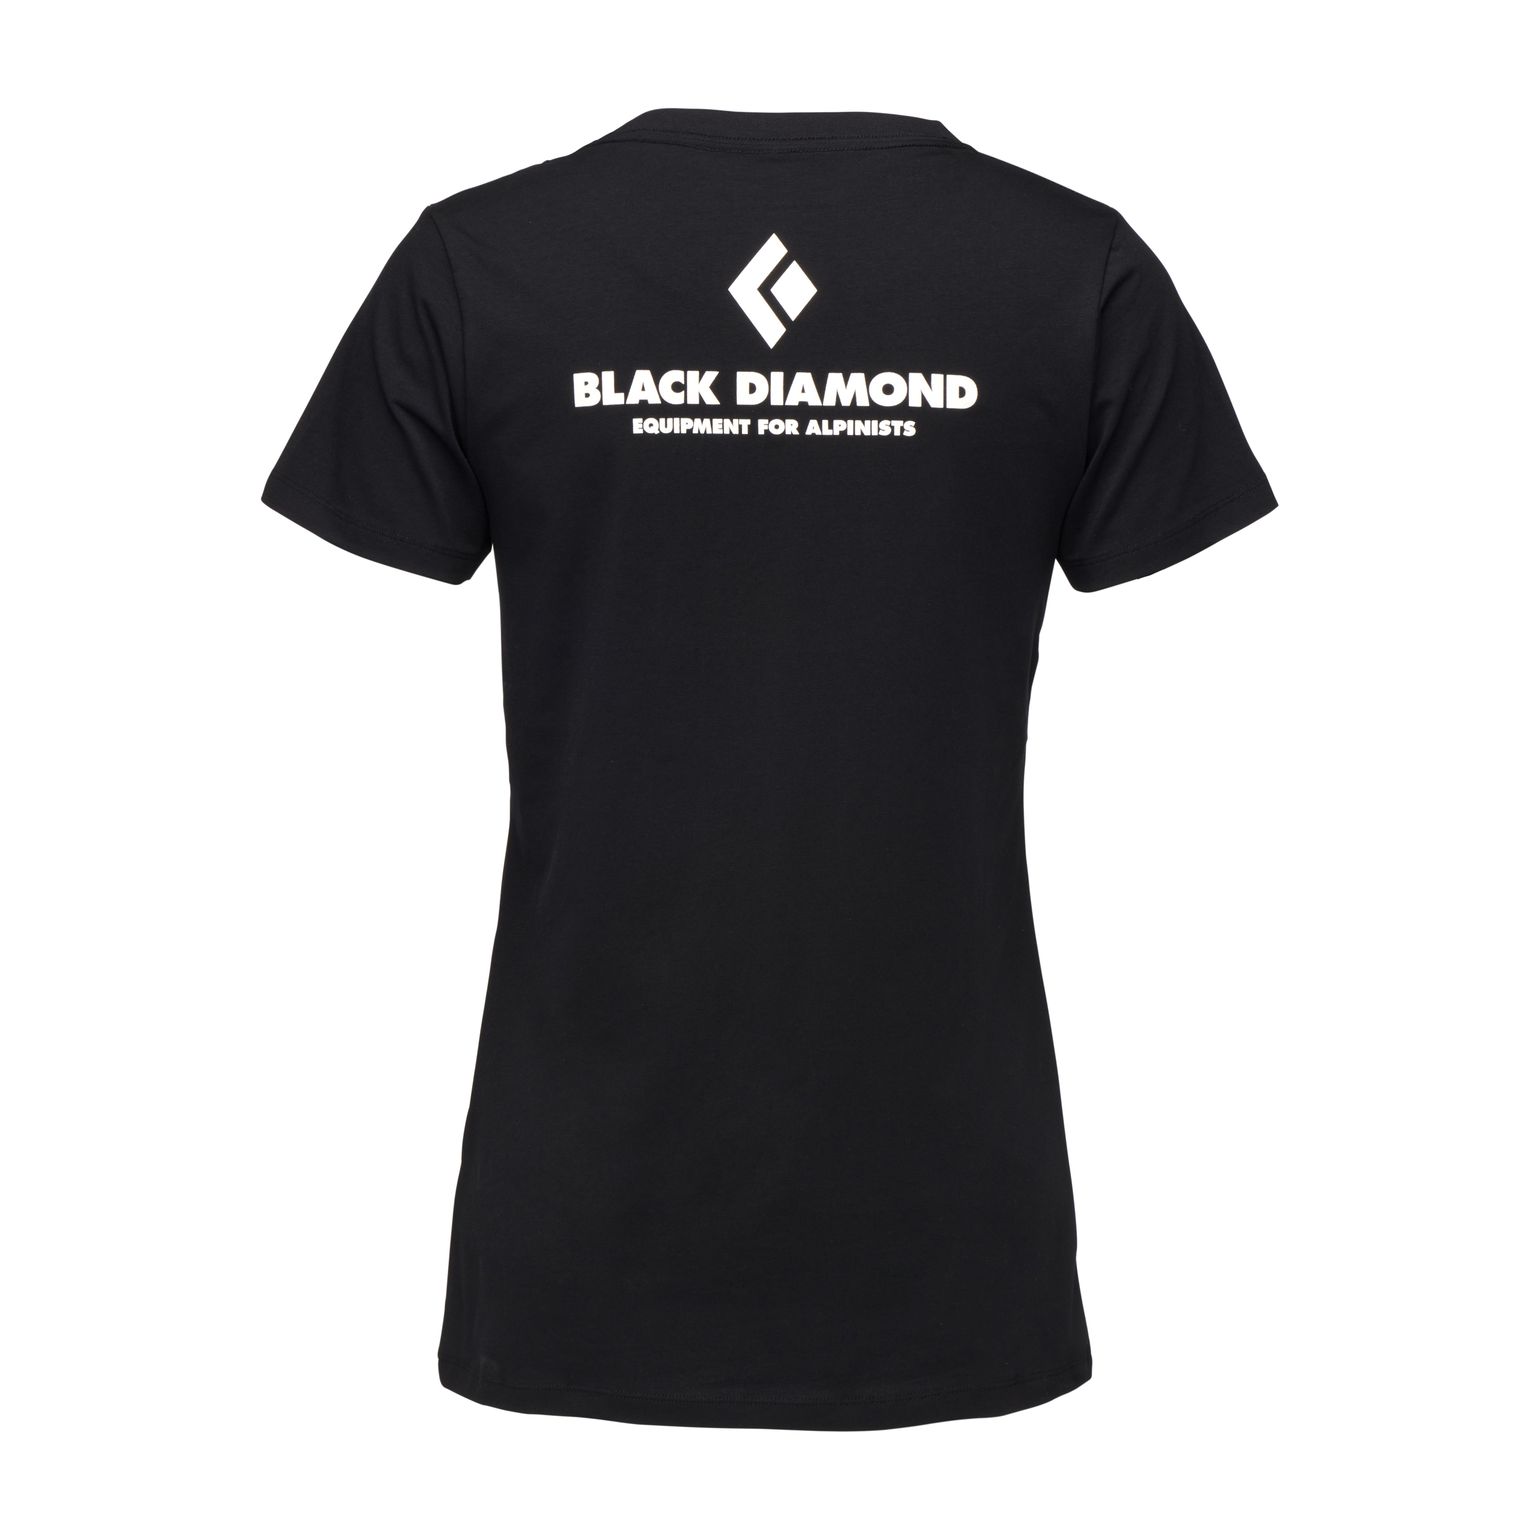 Black Diamond Women's Equipment For Alpinists SS Tee Black